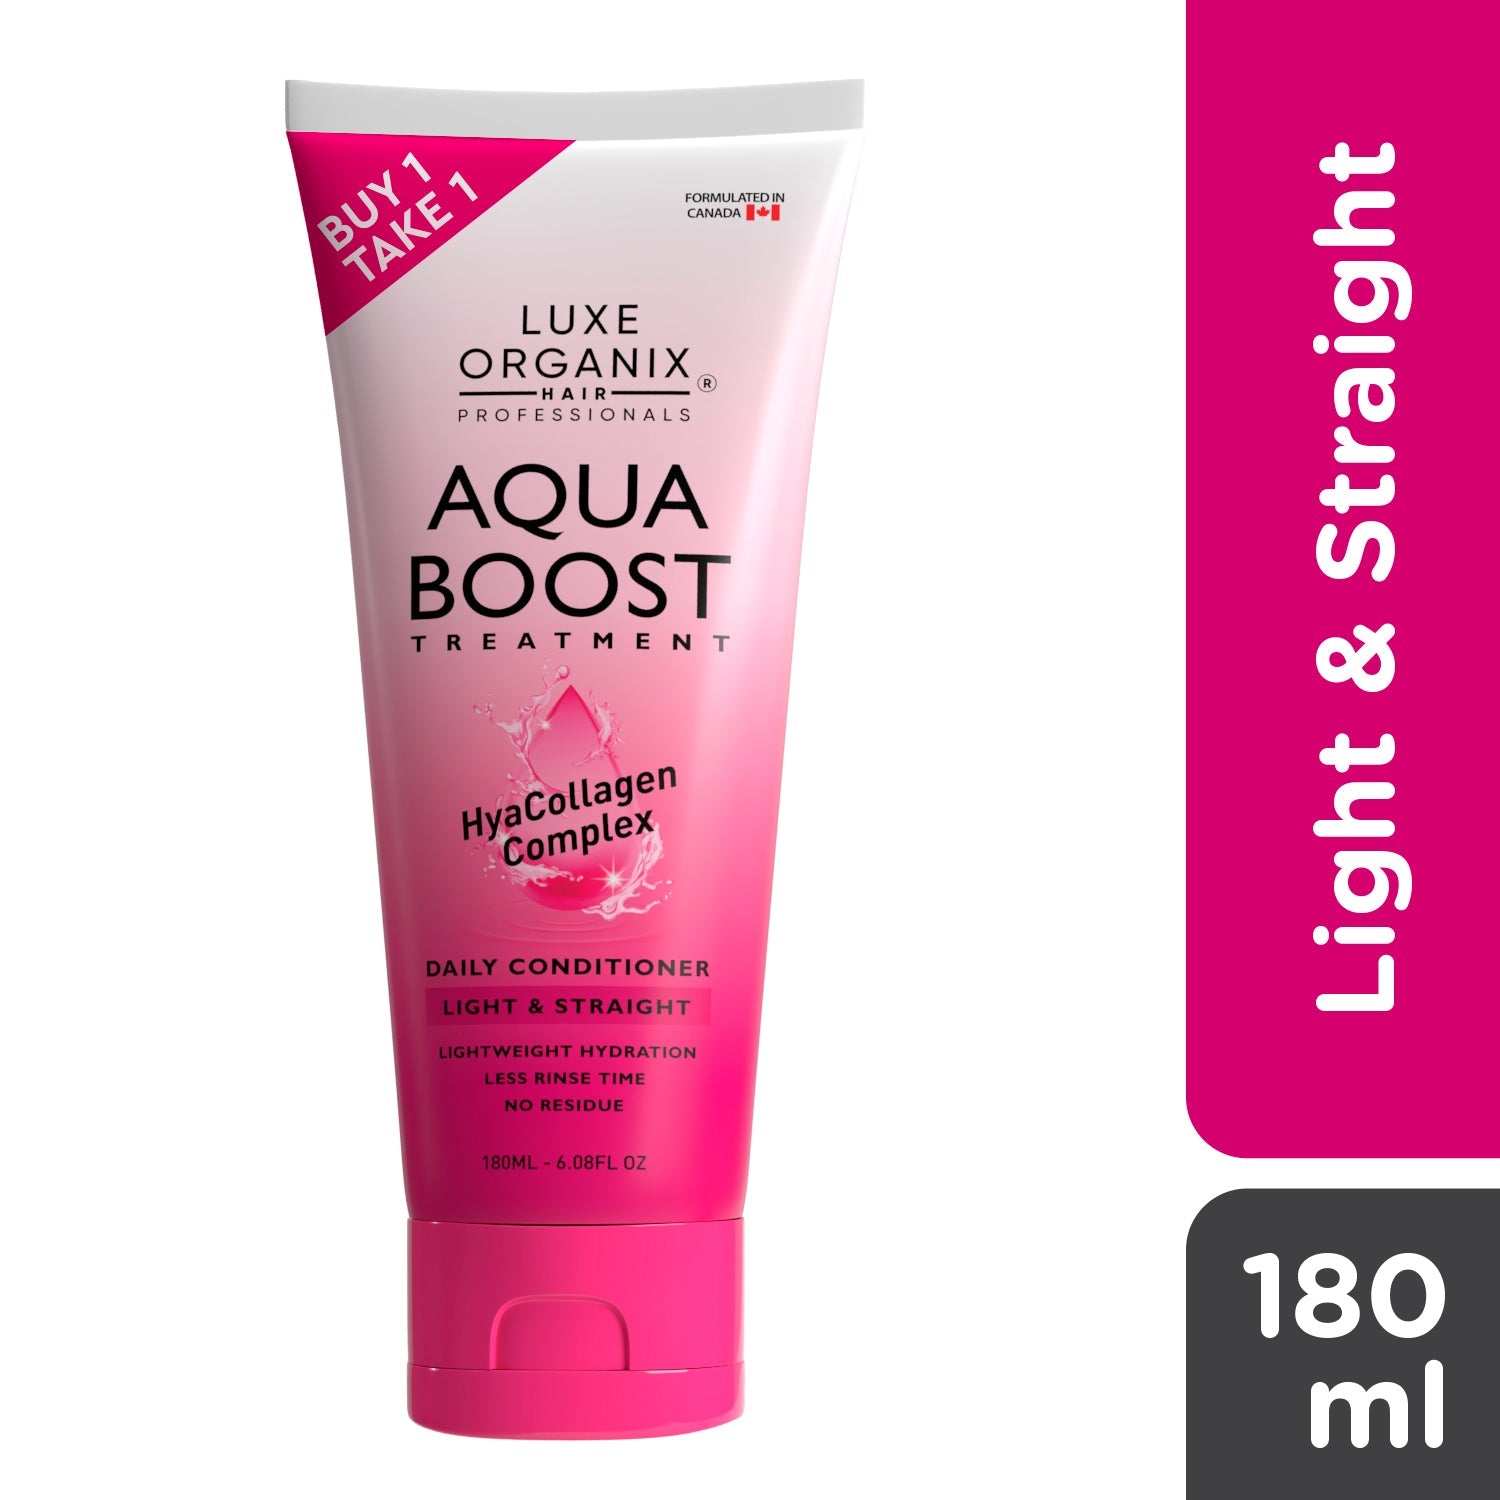 Aqua Boost Professional Treatment 180ml (Buy 1 Take 1) - Light & Straight